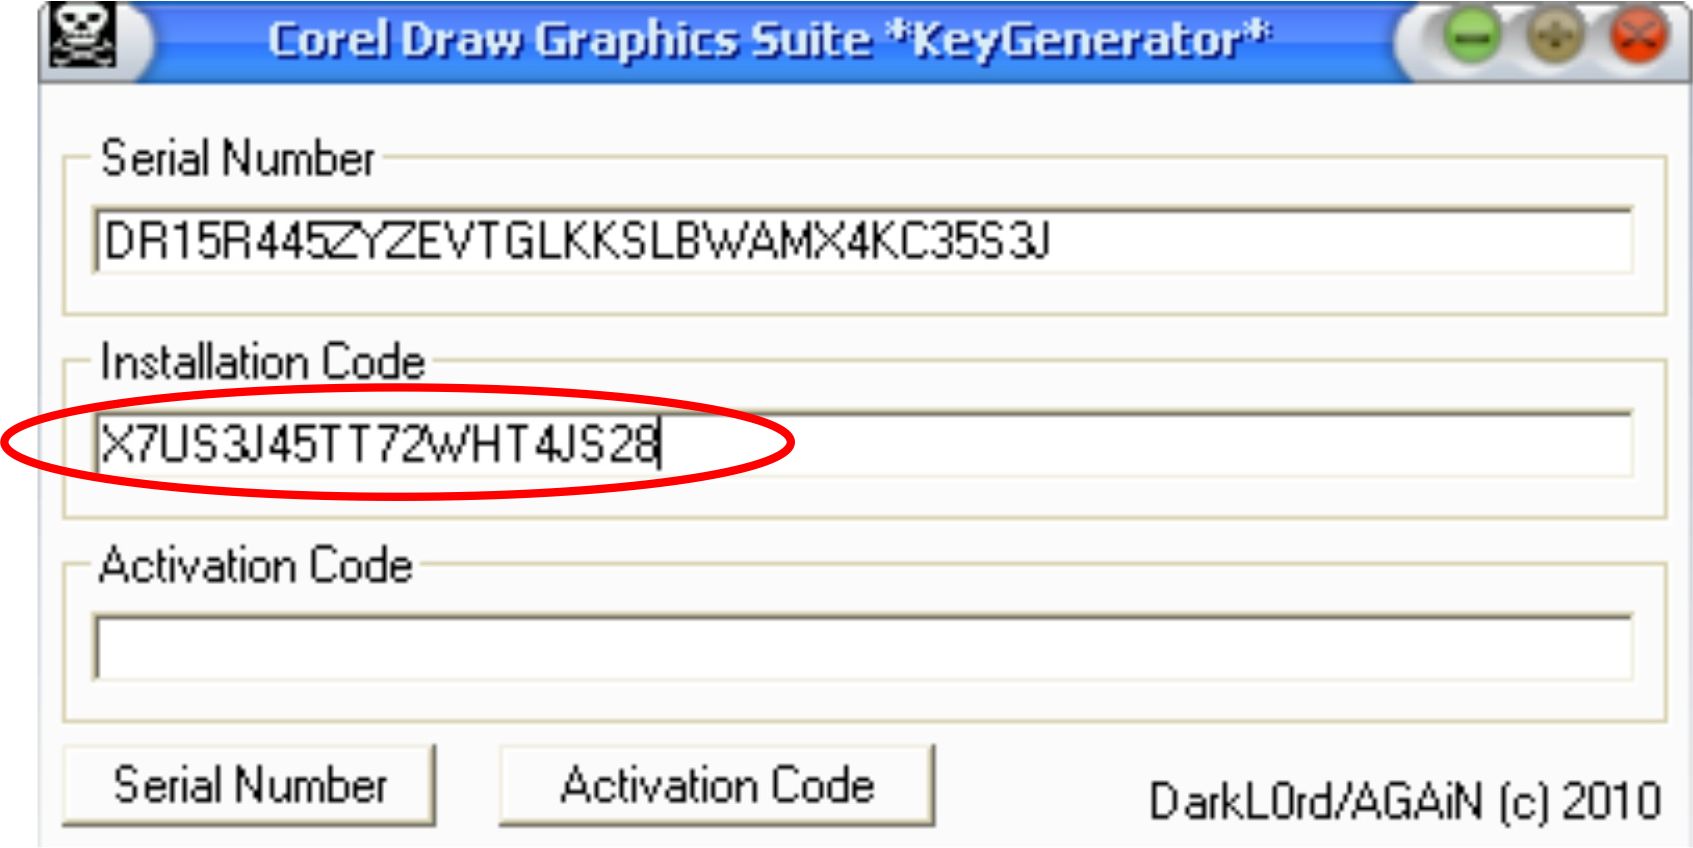 coreldraw graphics suite x5 serial number cracks